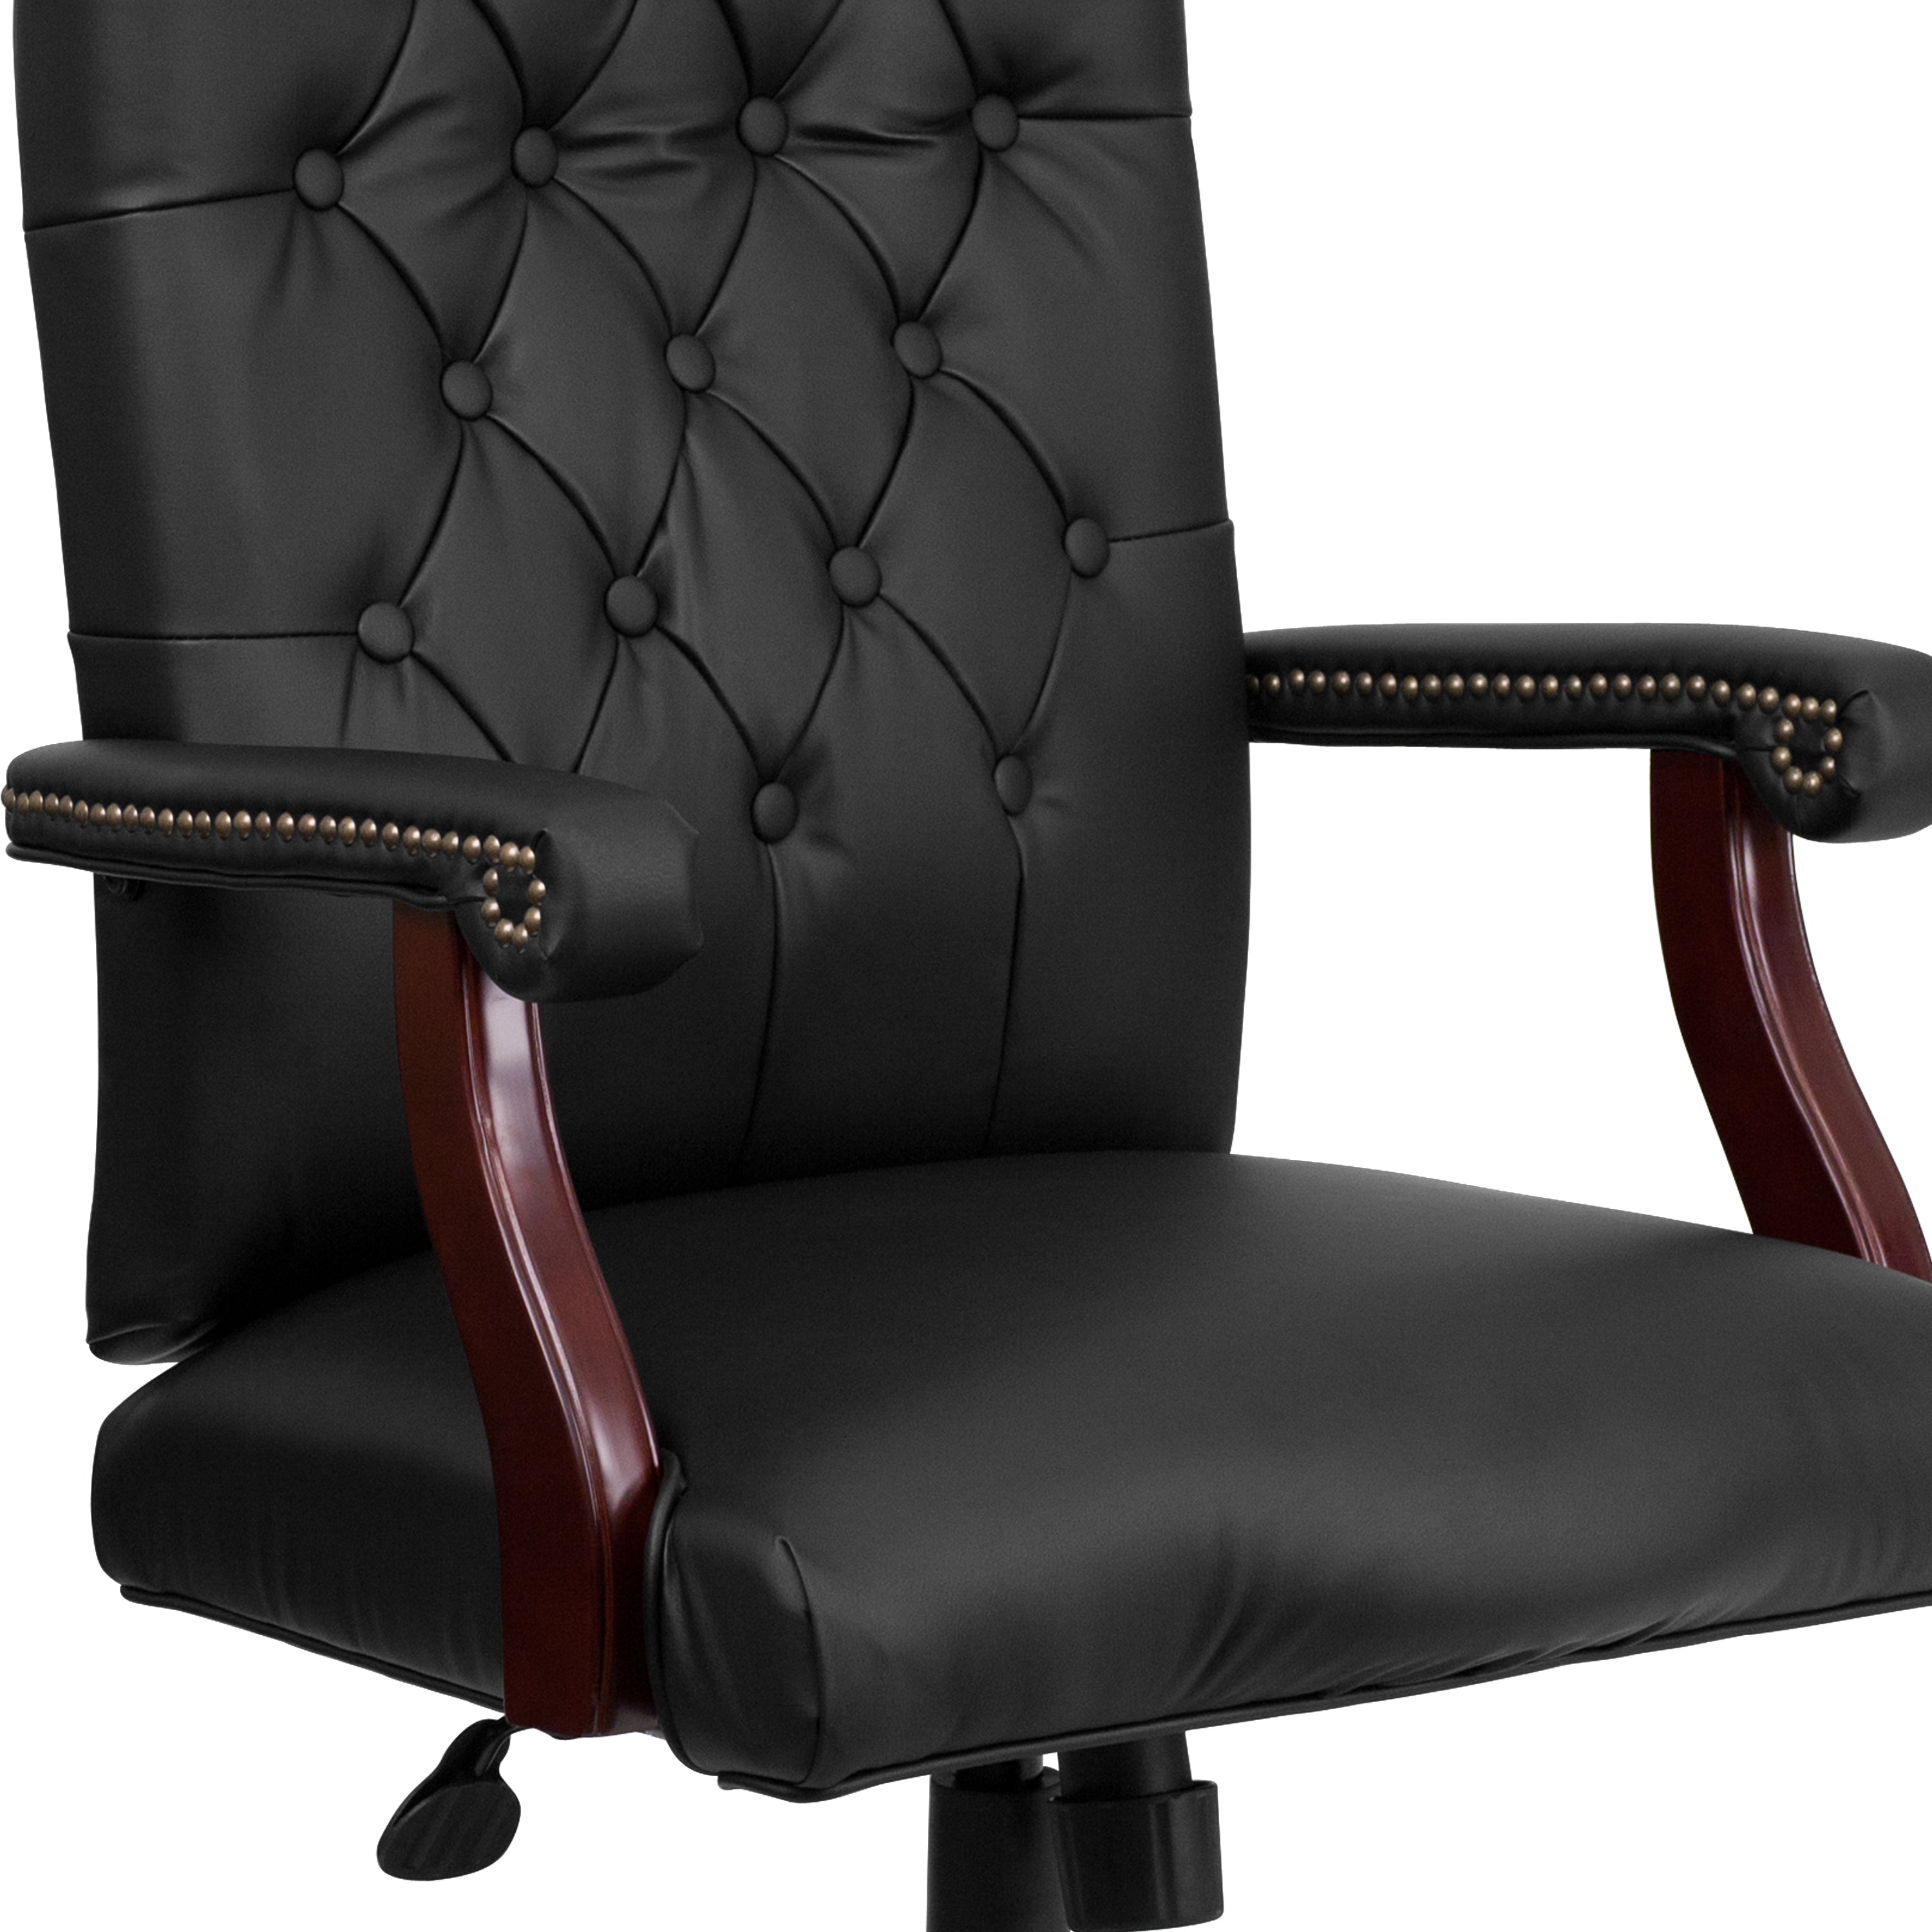 Martha Washington Executive Swivel Office Chair with Arms-Office Chair-Flash Furniture-Wall2Wall Furnishings